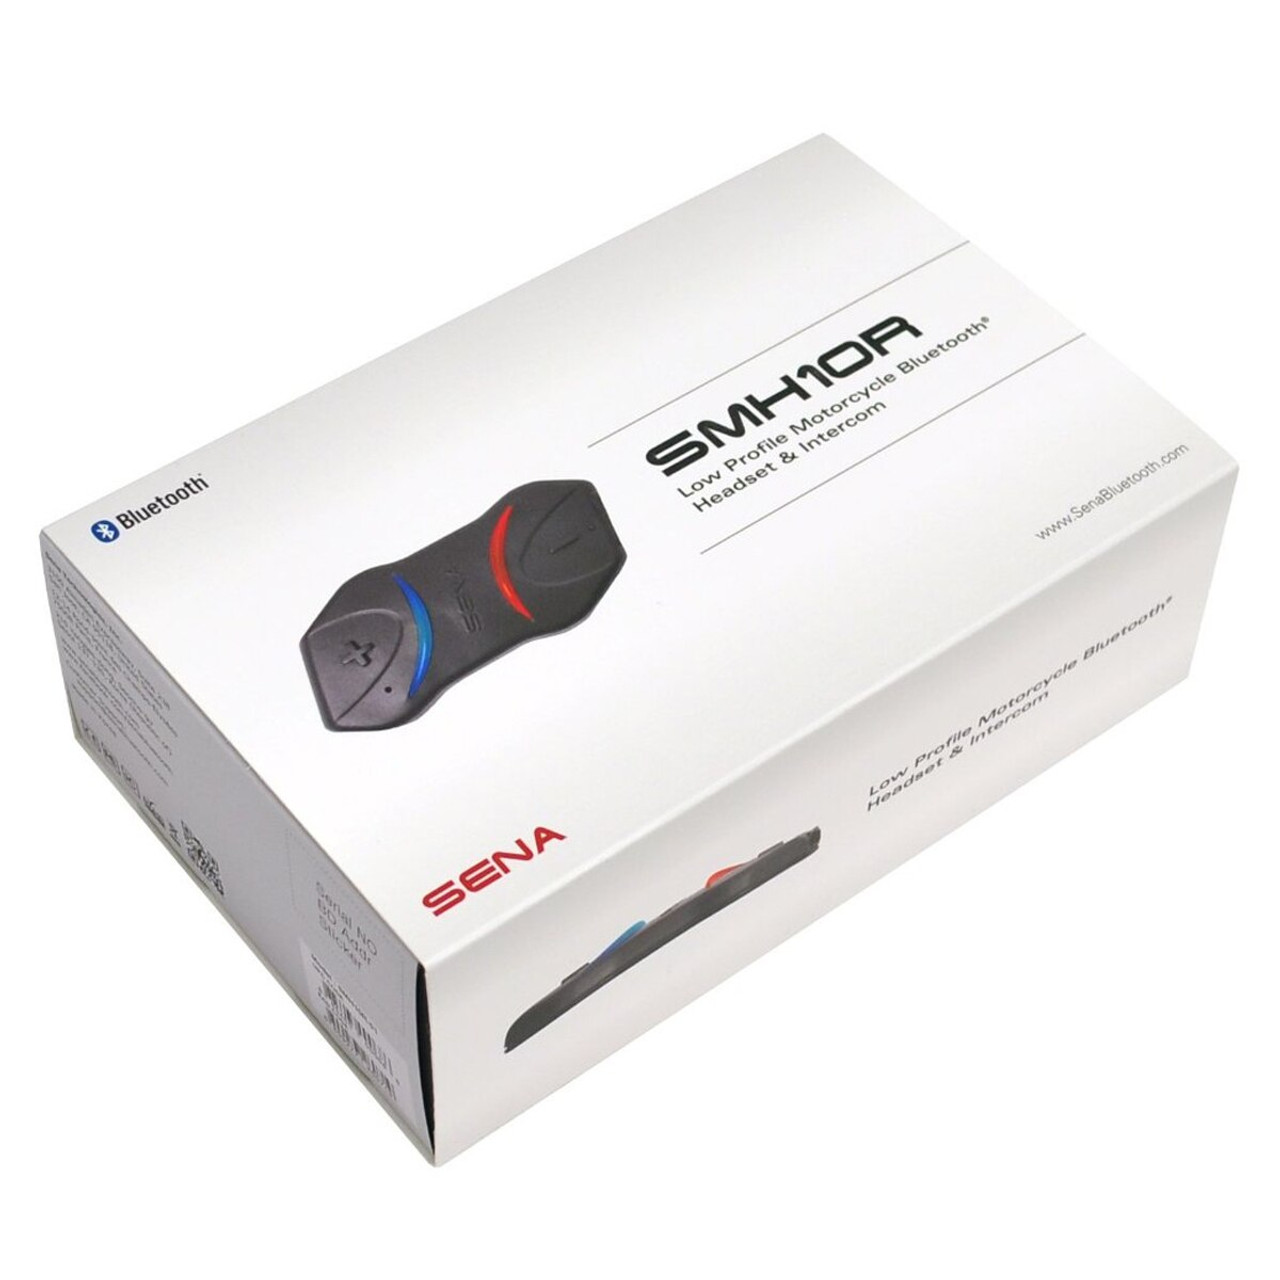 Sena SMH10R Low Profile Single Motorcycle Bluetooth Headset and